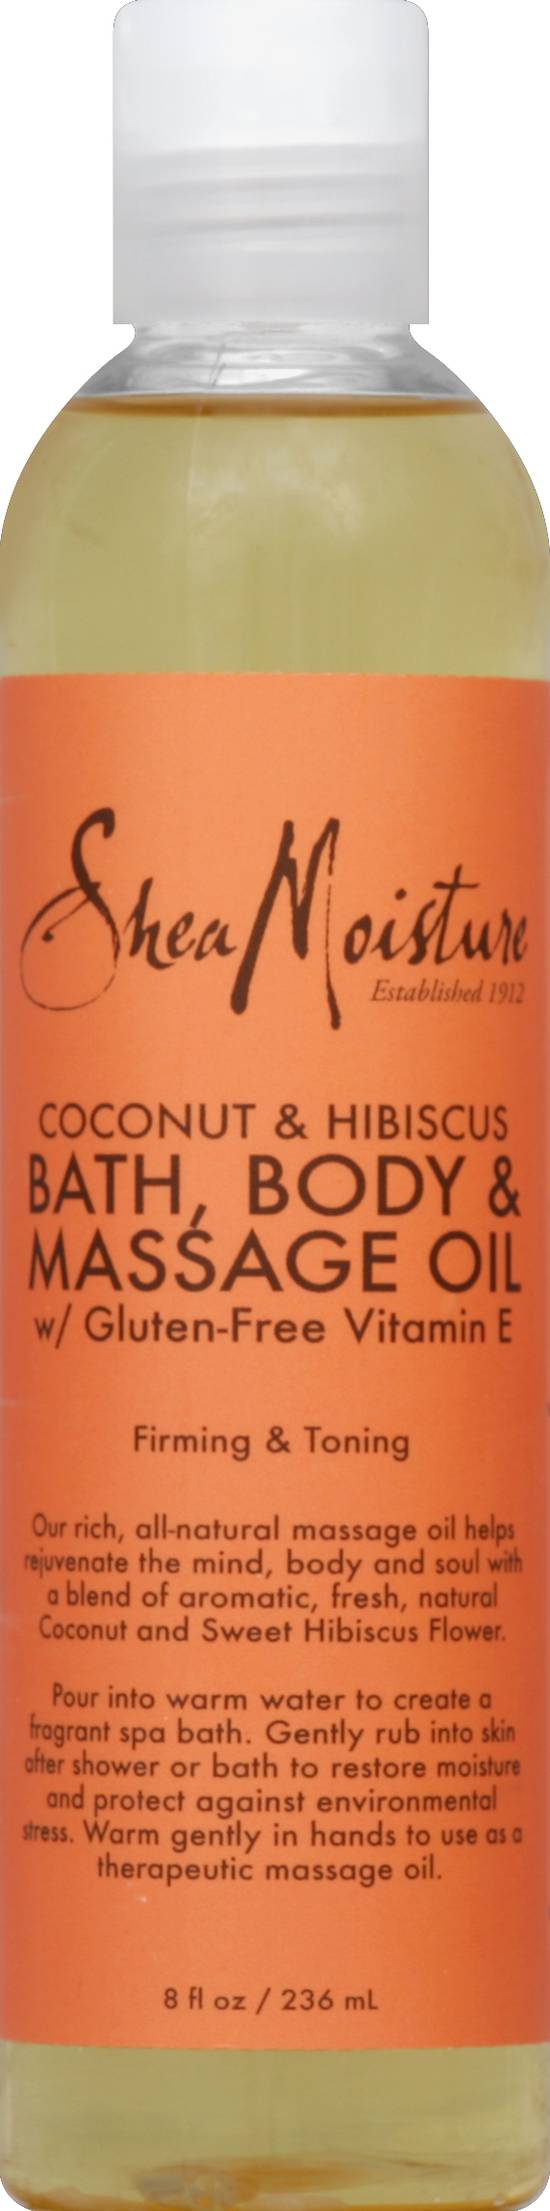 Shea Moisture Coconut & Hibiscus Bath, Body & Massage Oil